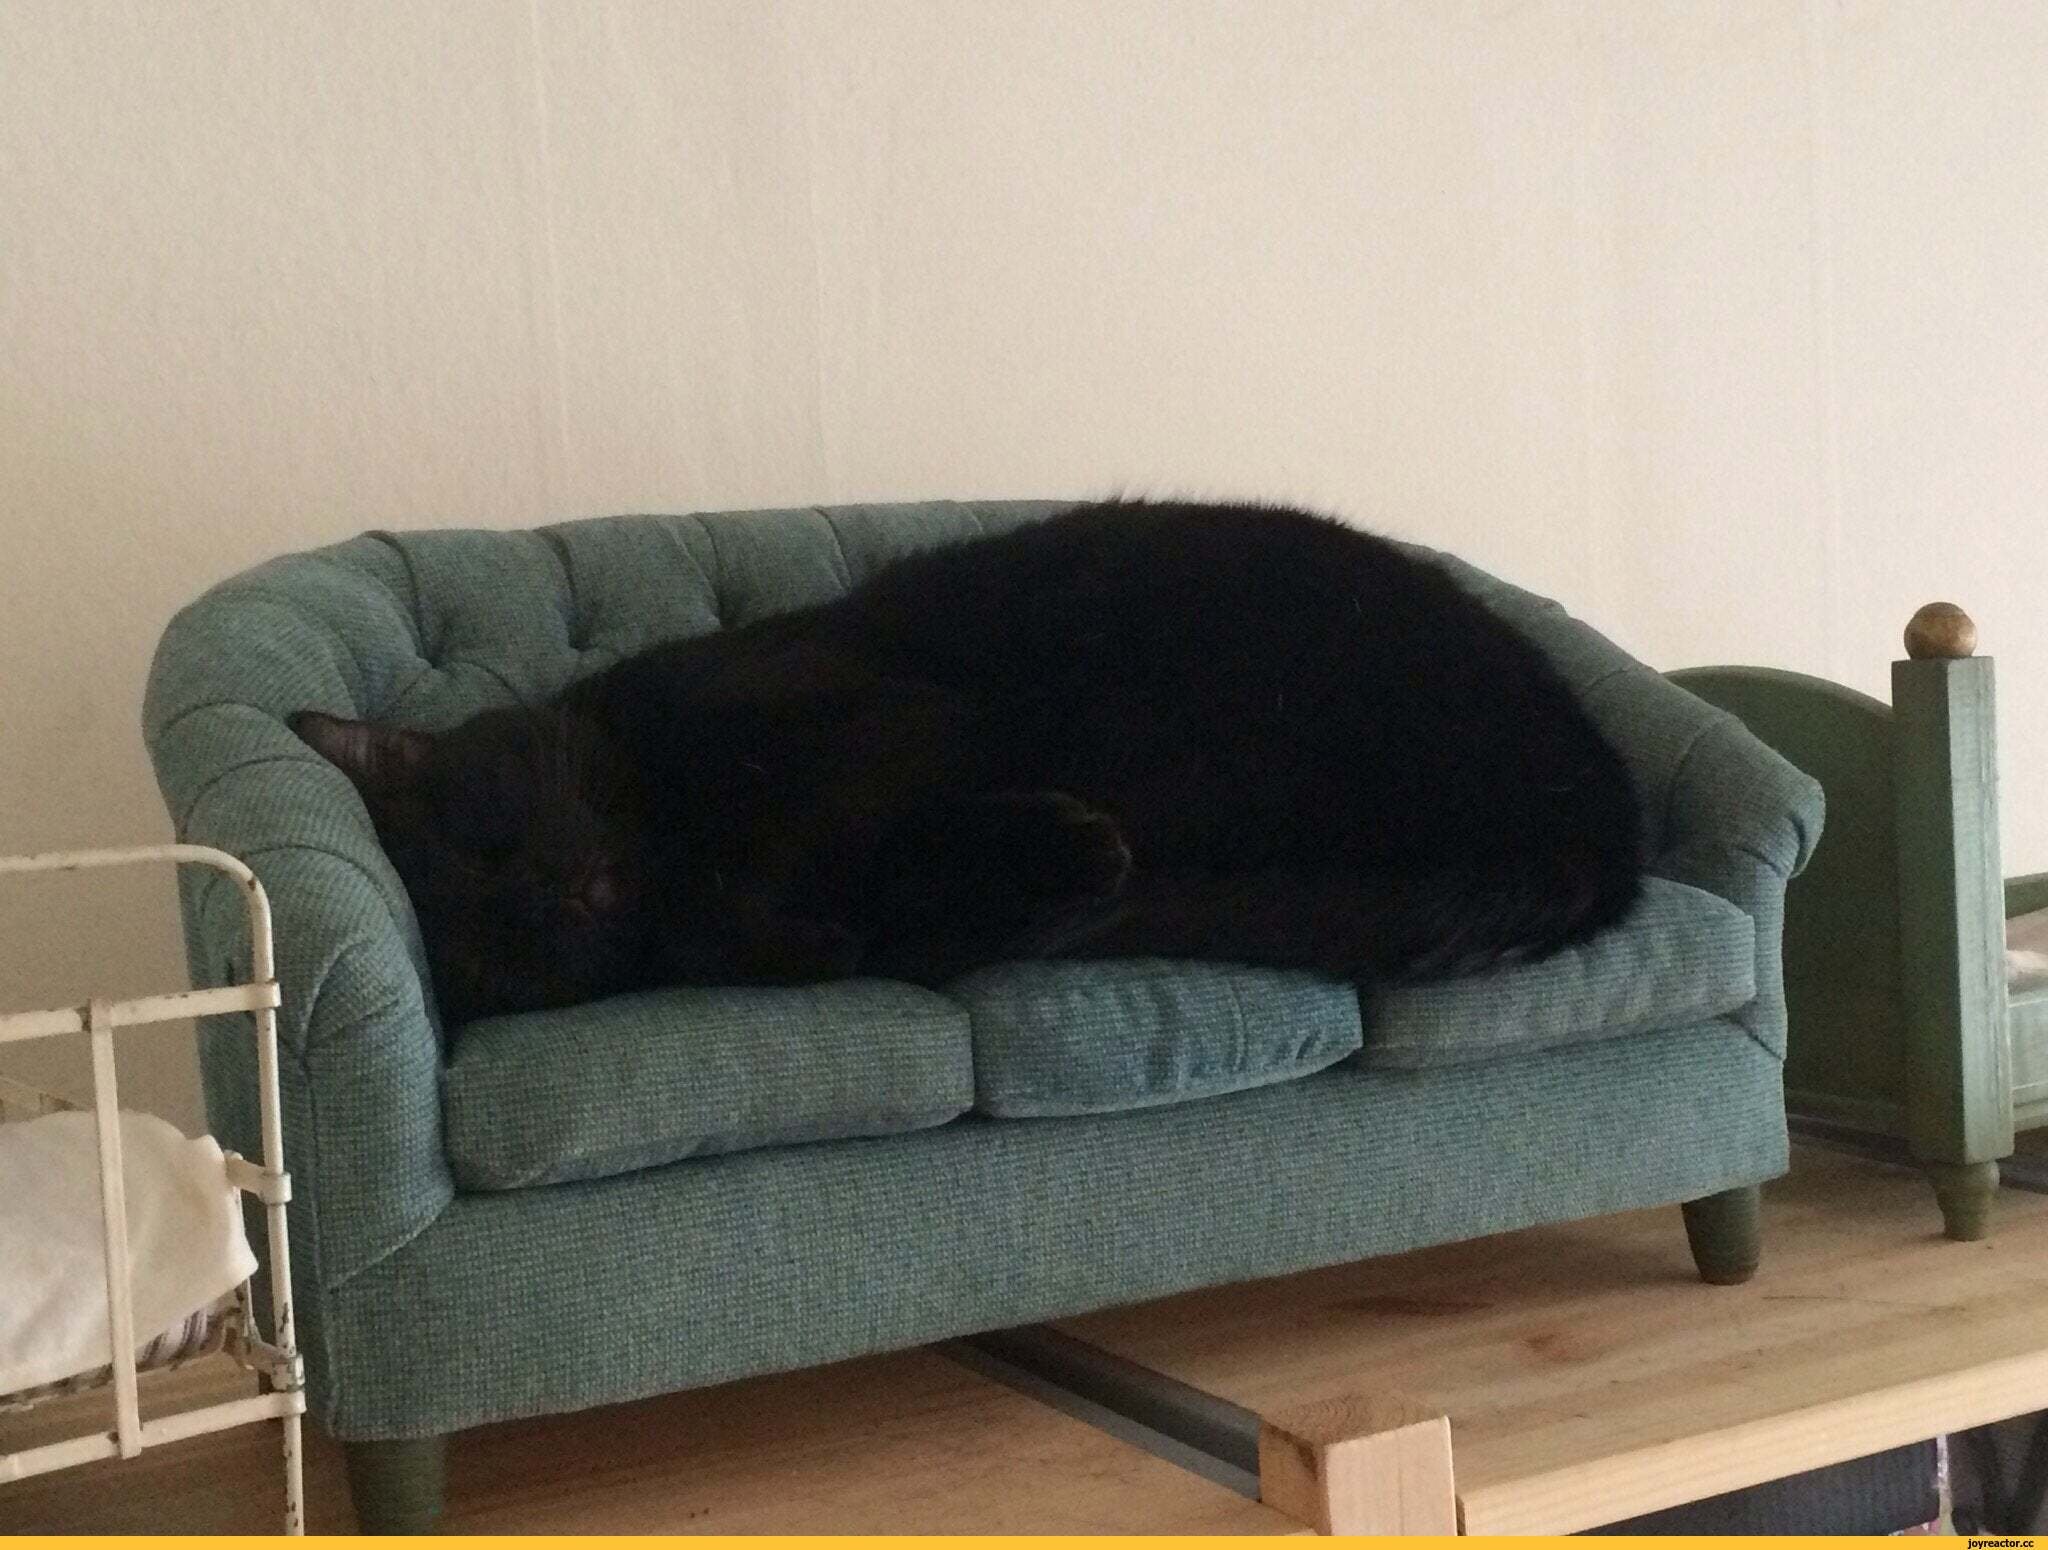 Диван лени. Кот на диване. Смешной диван. Кошачий диван. Мягкий диванчик для кошки.